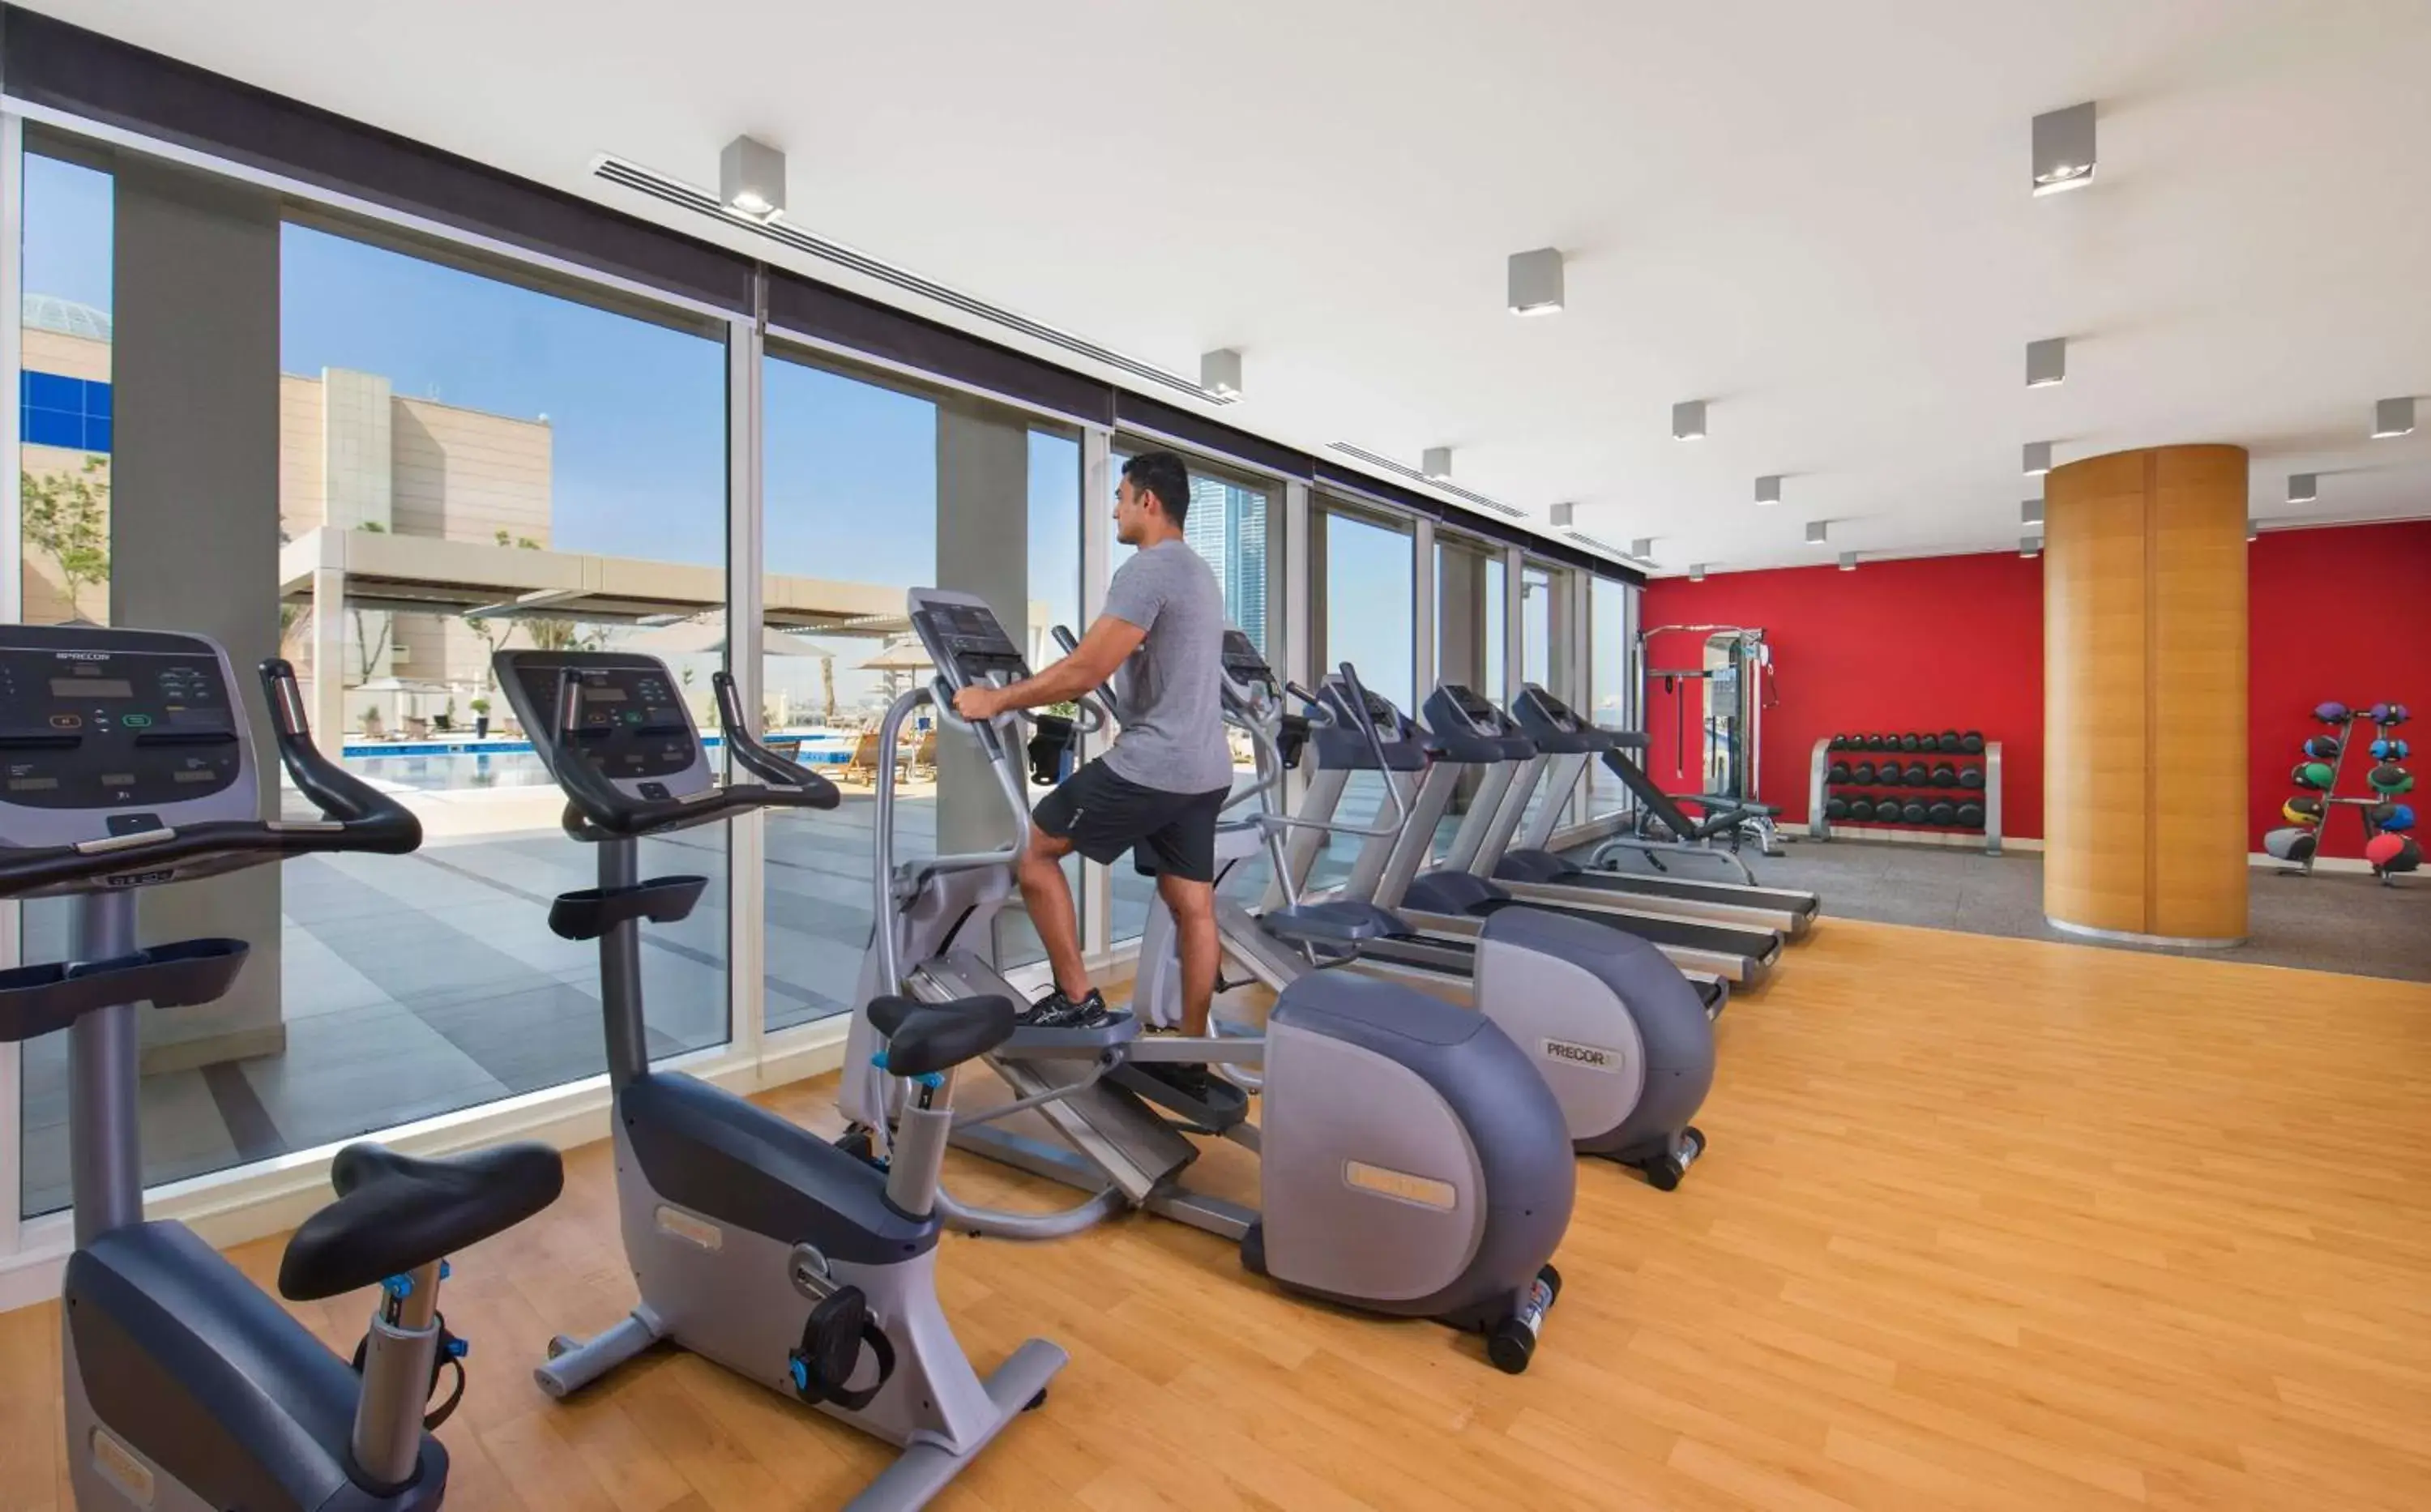 Fitness centre/facilities, Fitness Center/Facilities in Hilton Garden Inn Ras Al Khaimah